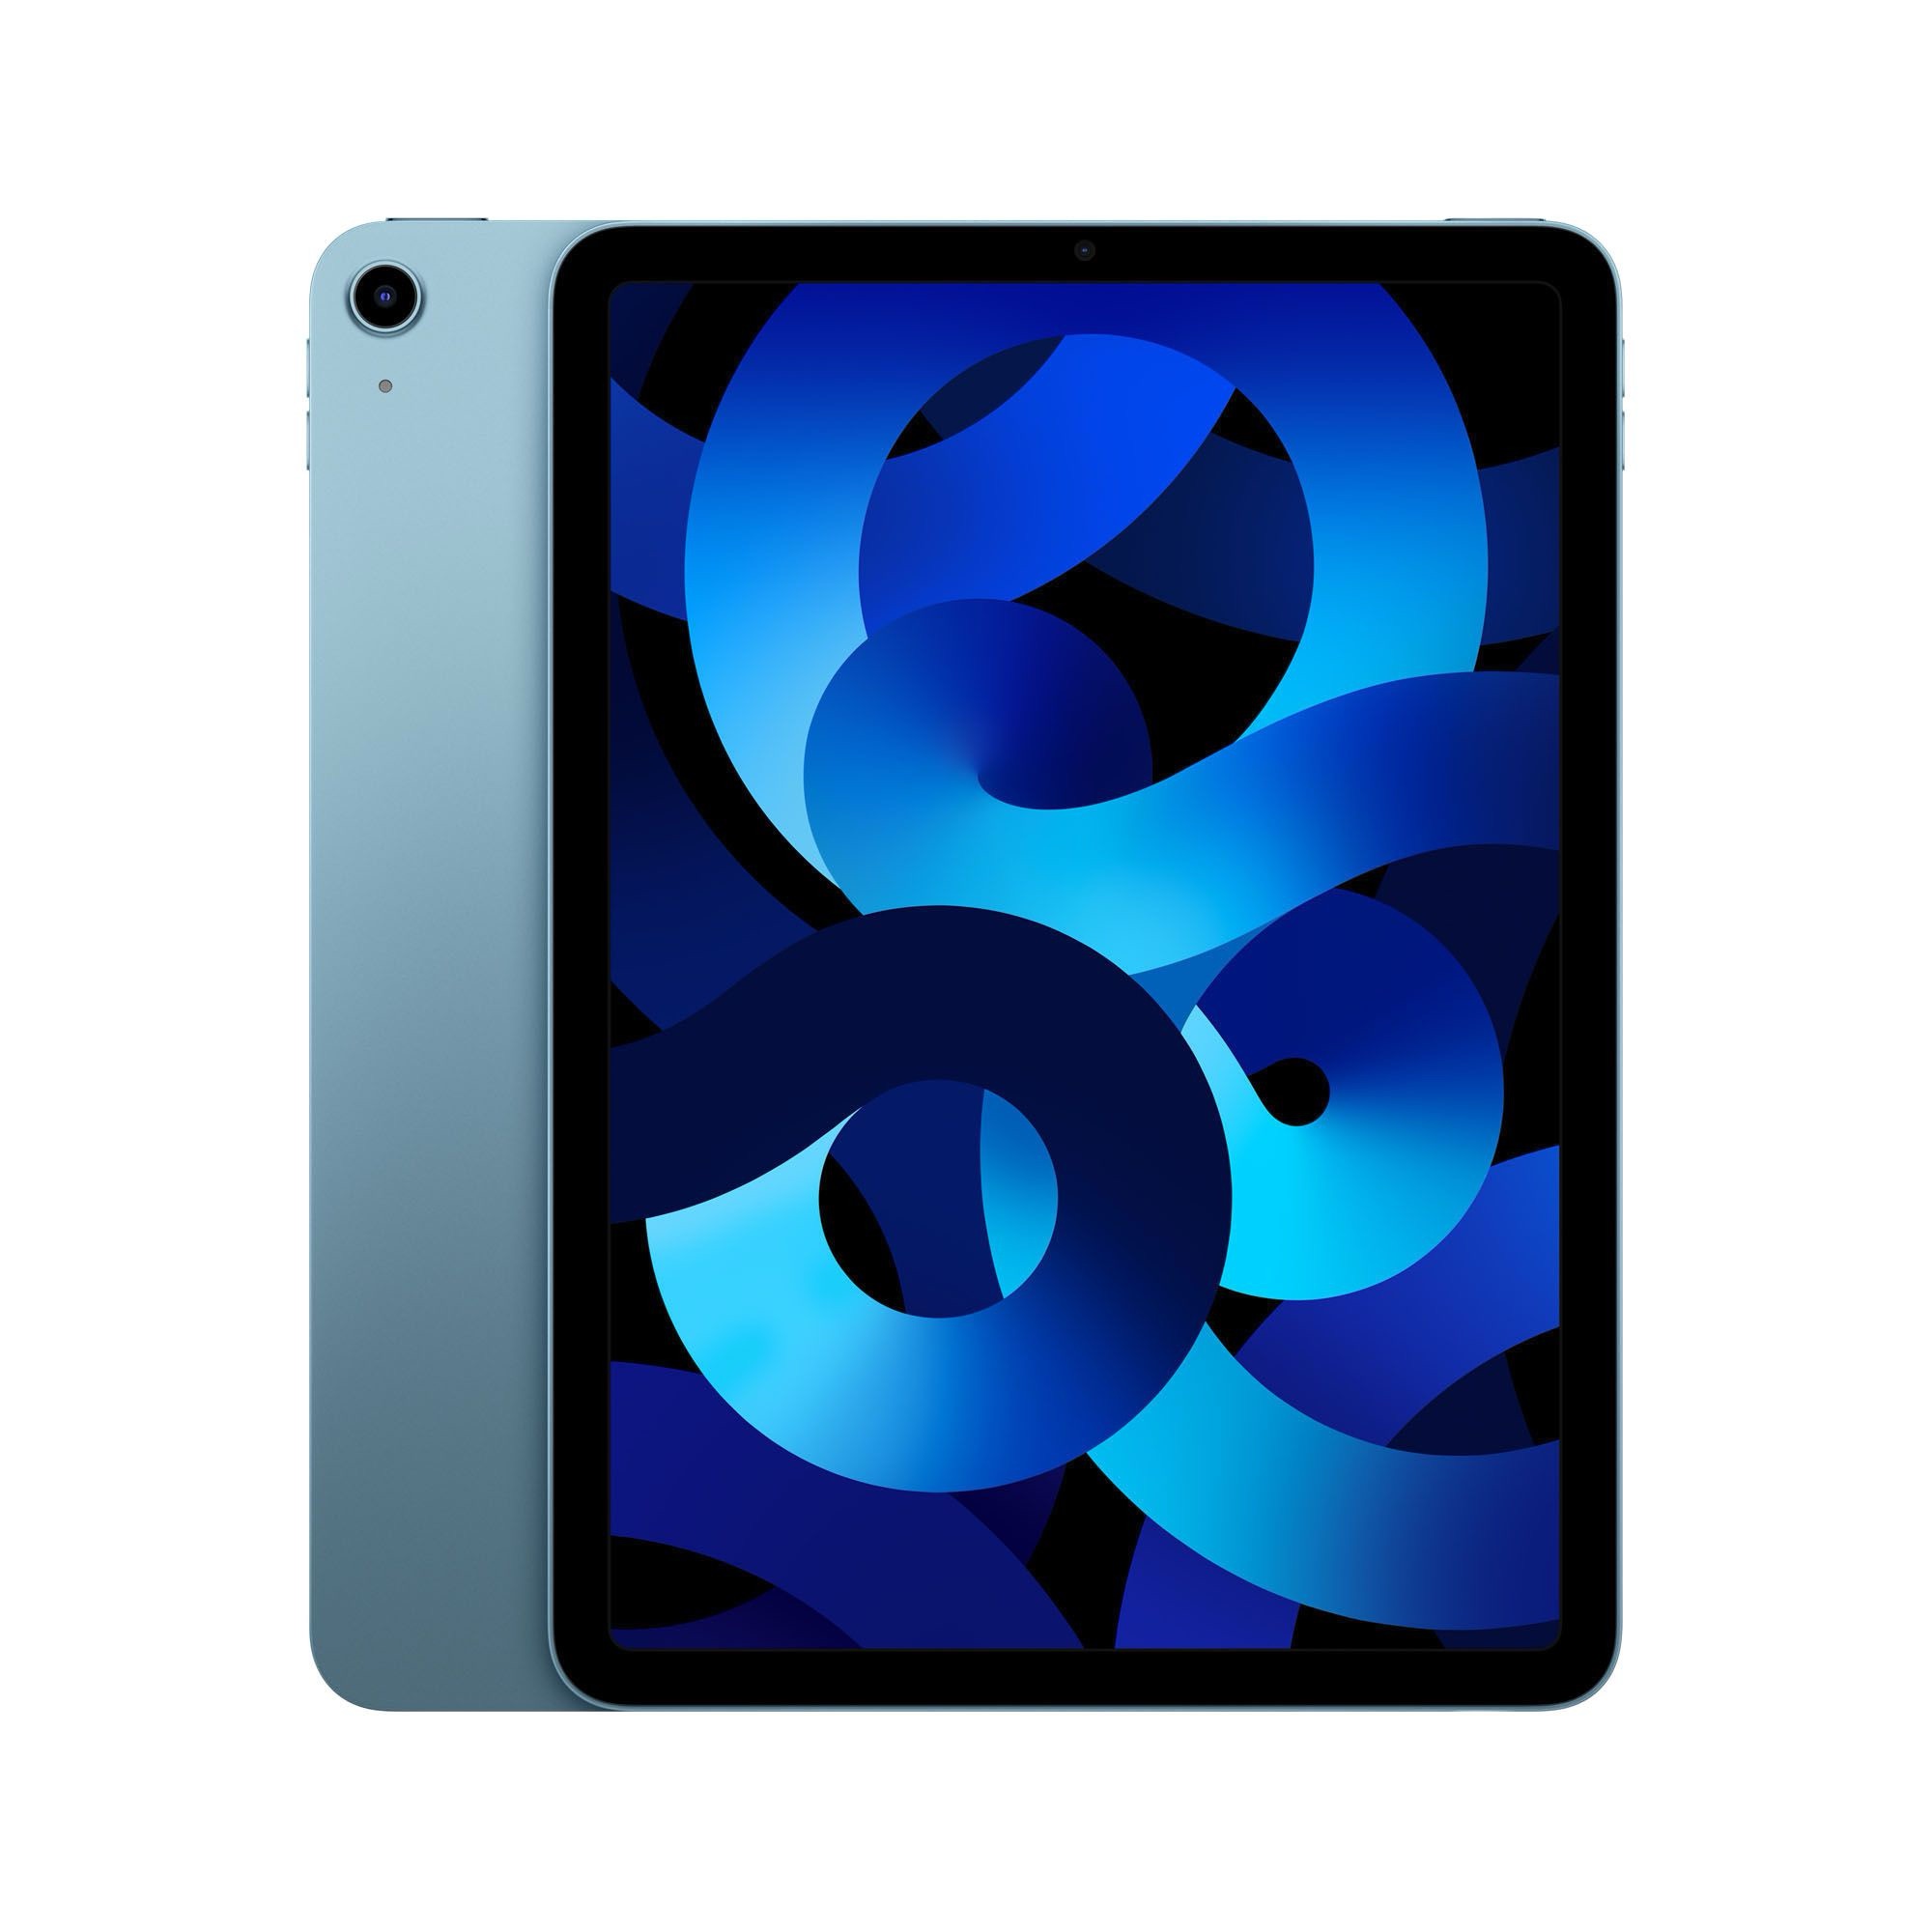 Apple iPad Air 10.9", 64GB, Wi-Fi - Space Gray | BJ's Wholesale Club